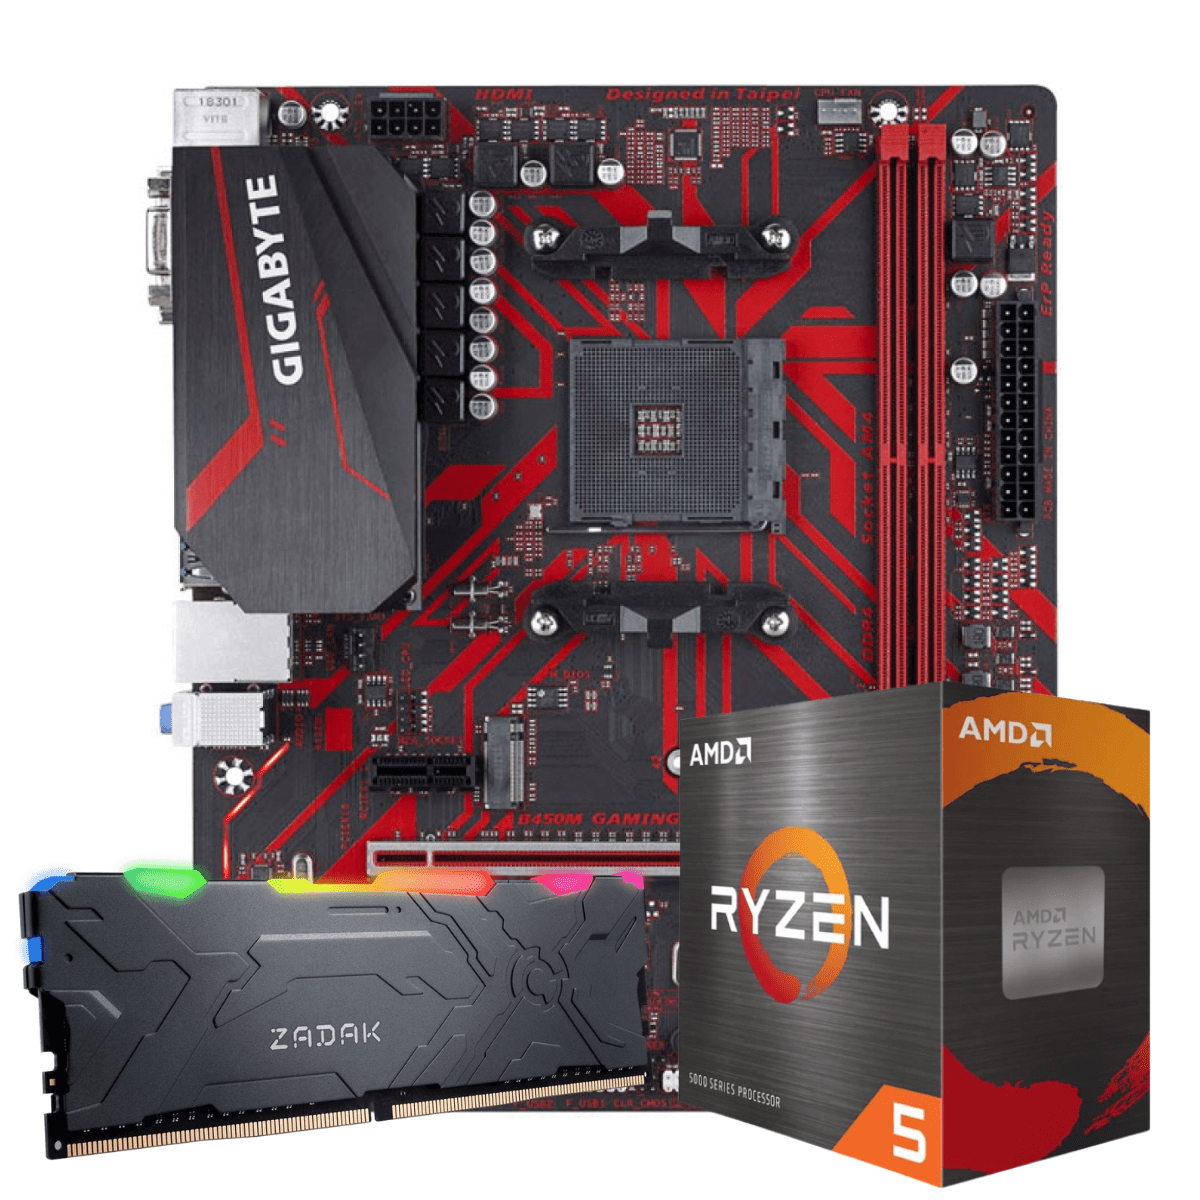 Kit Upgrade, AMD Ryzen 5 4600G, Placa Mãe Gigabyte B450M Gaming, 8GB DDR4